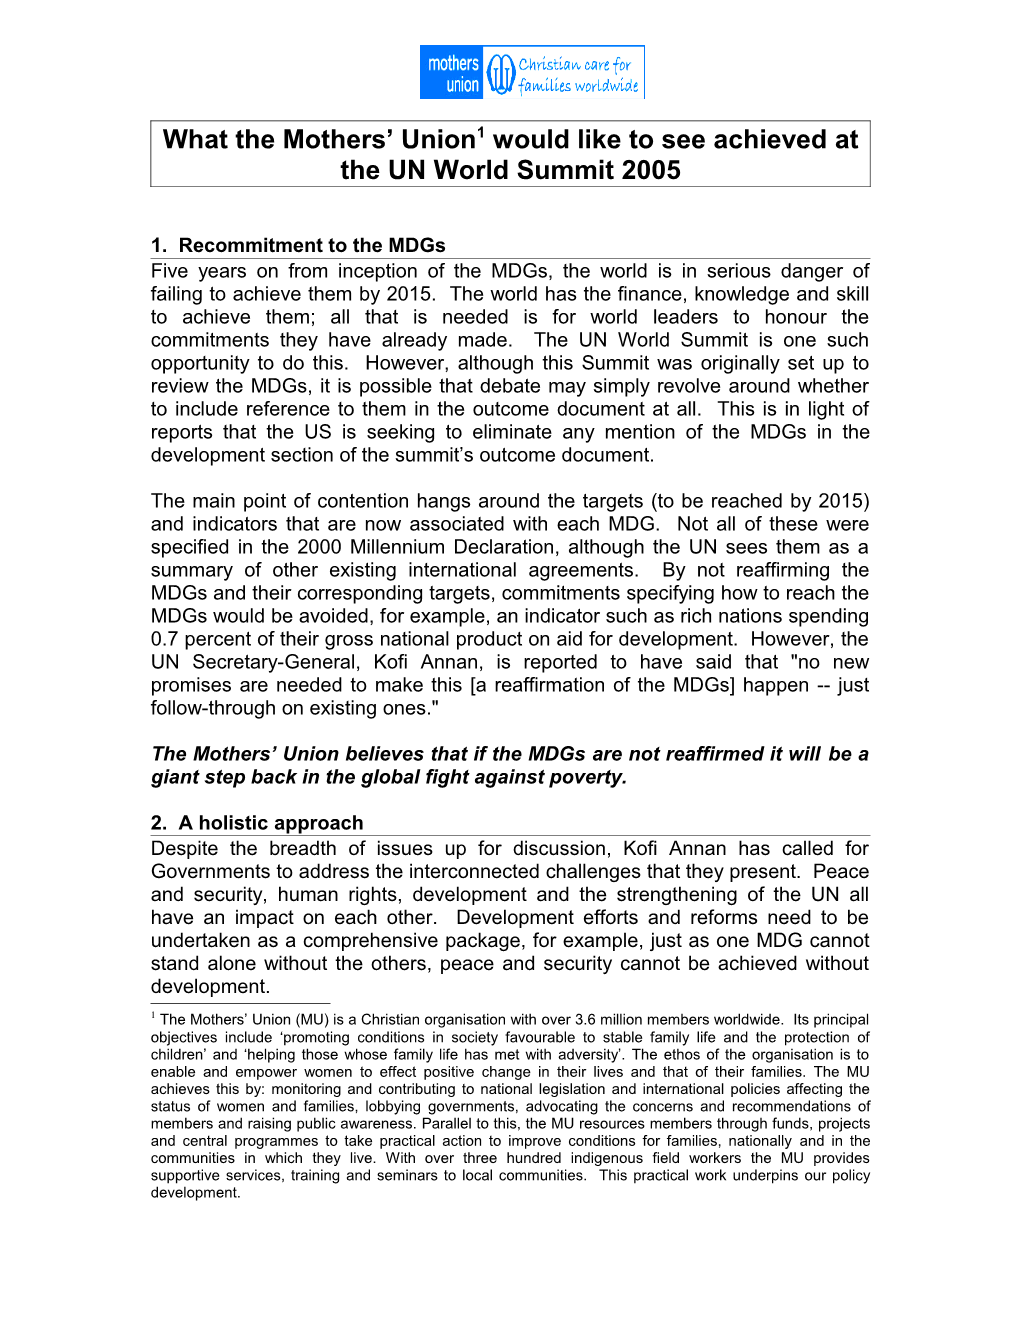 UN World Summit 2005 14-16 September 2005